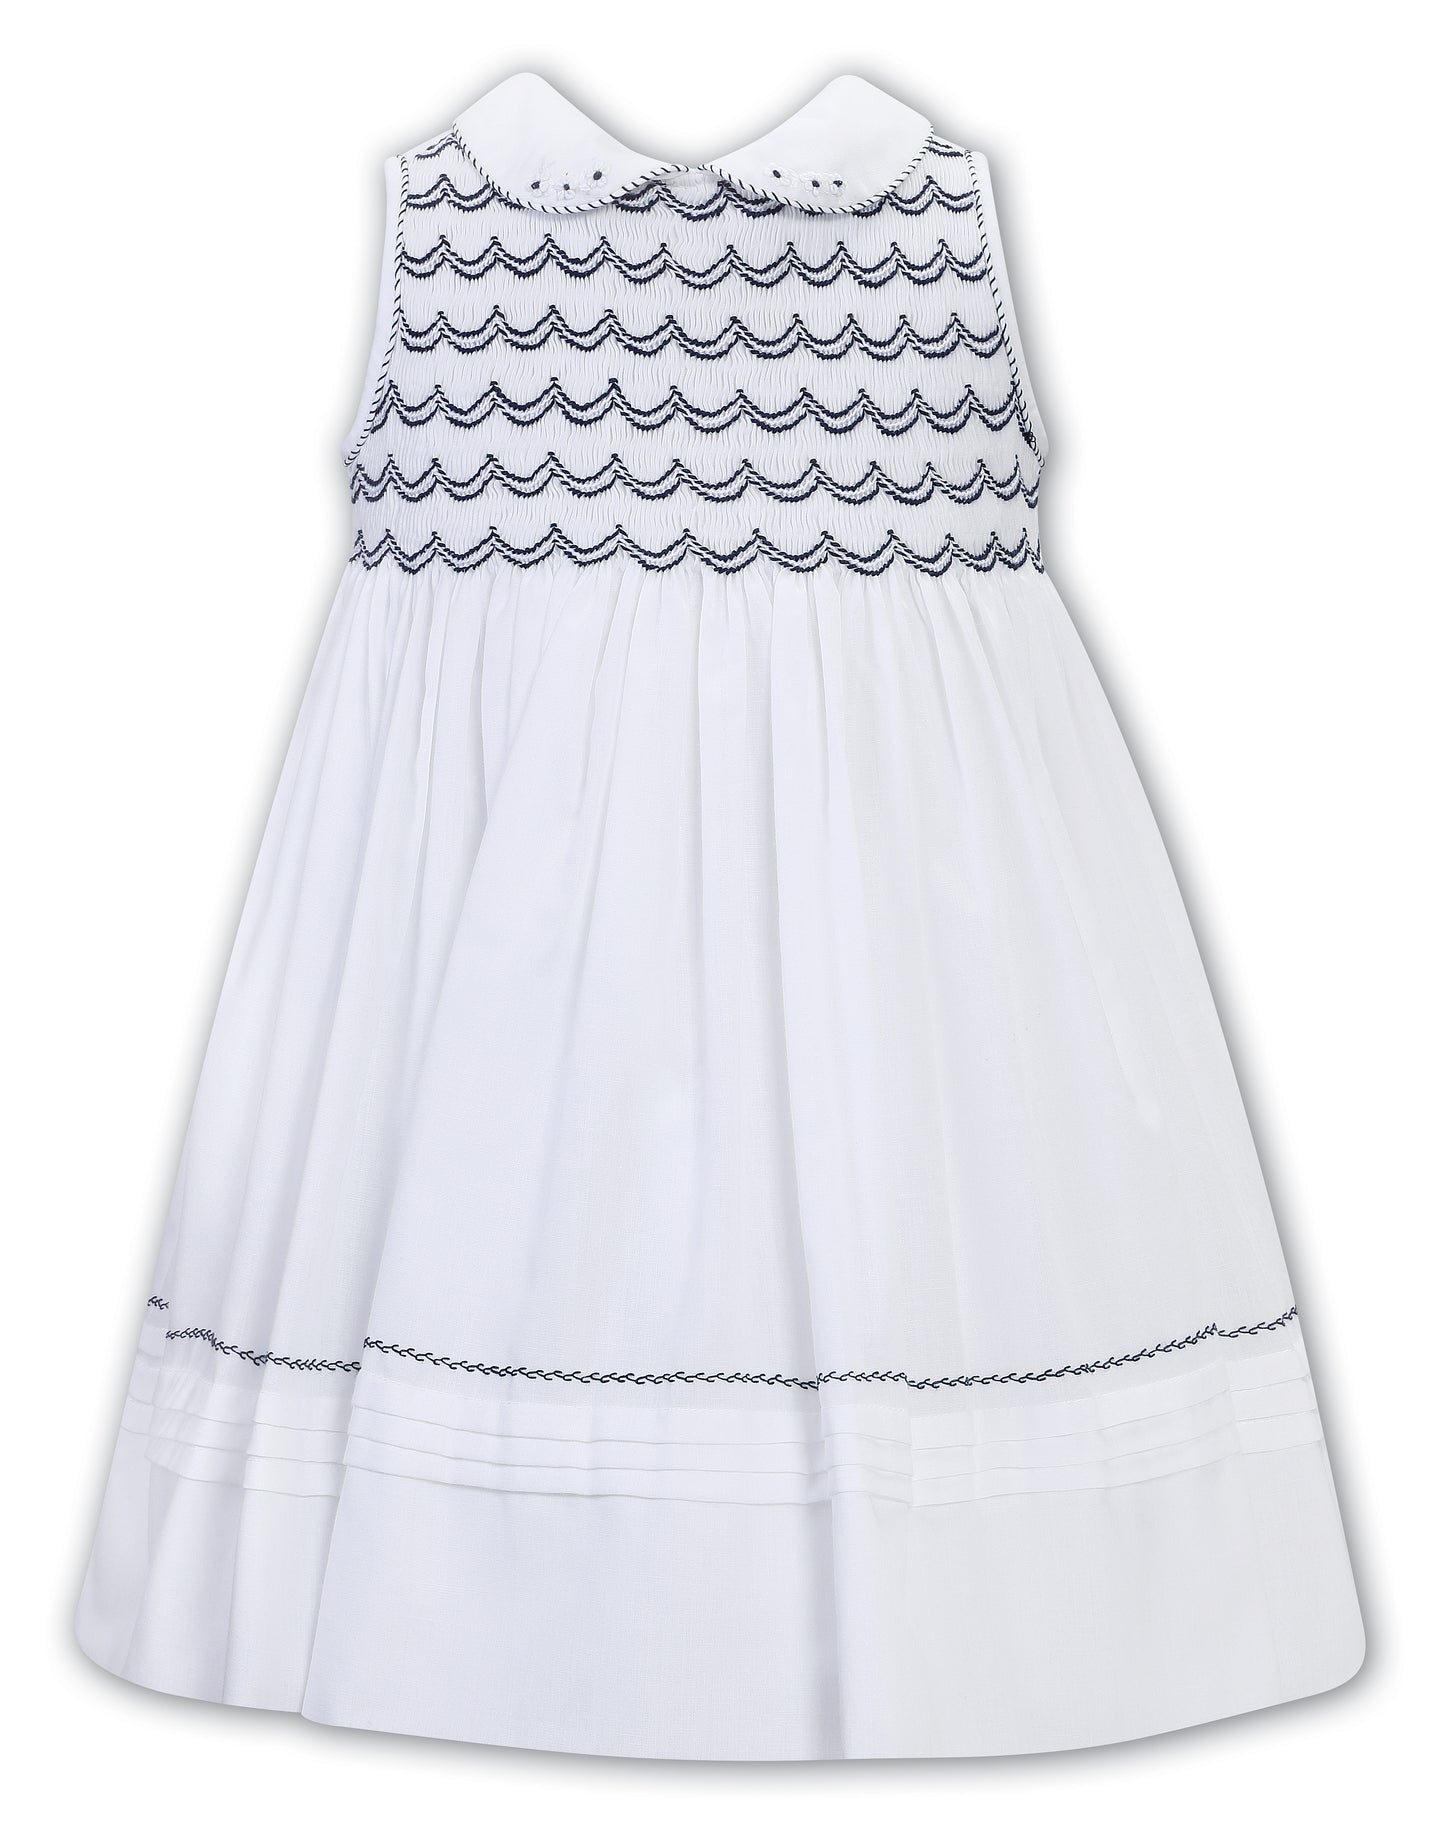 Sarah Louise Smocked White and Navy Dress